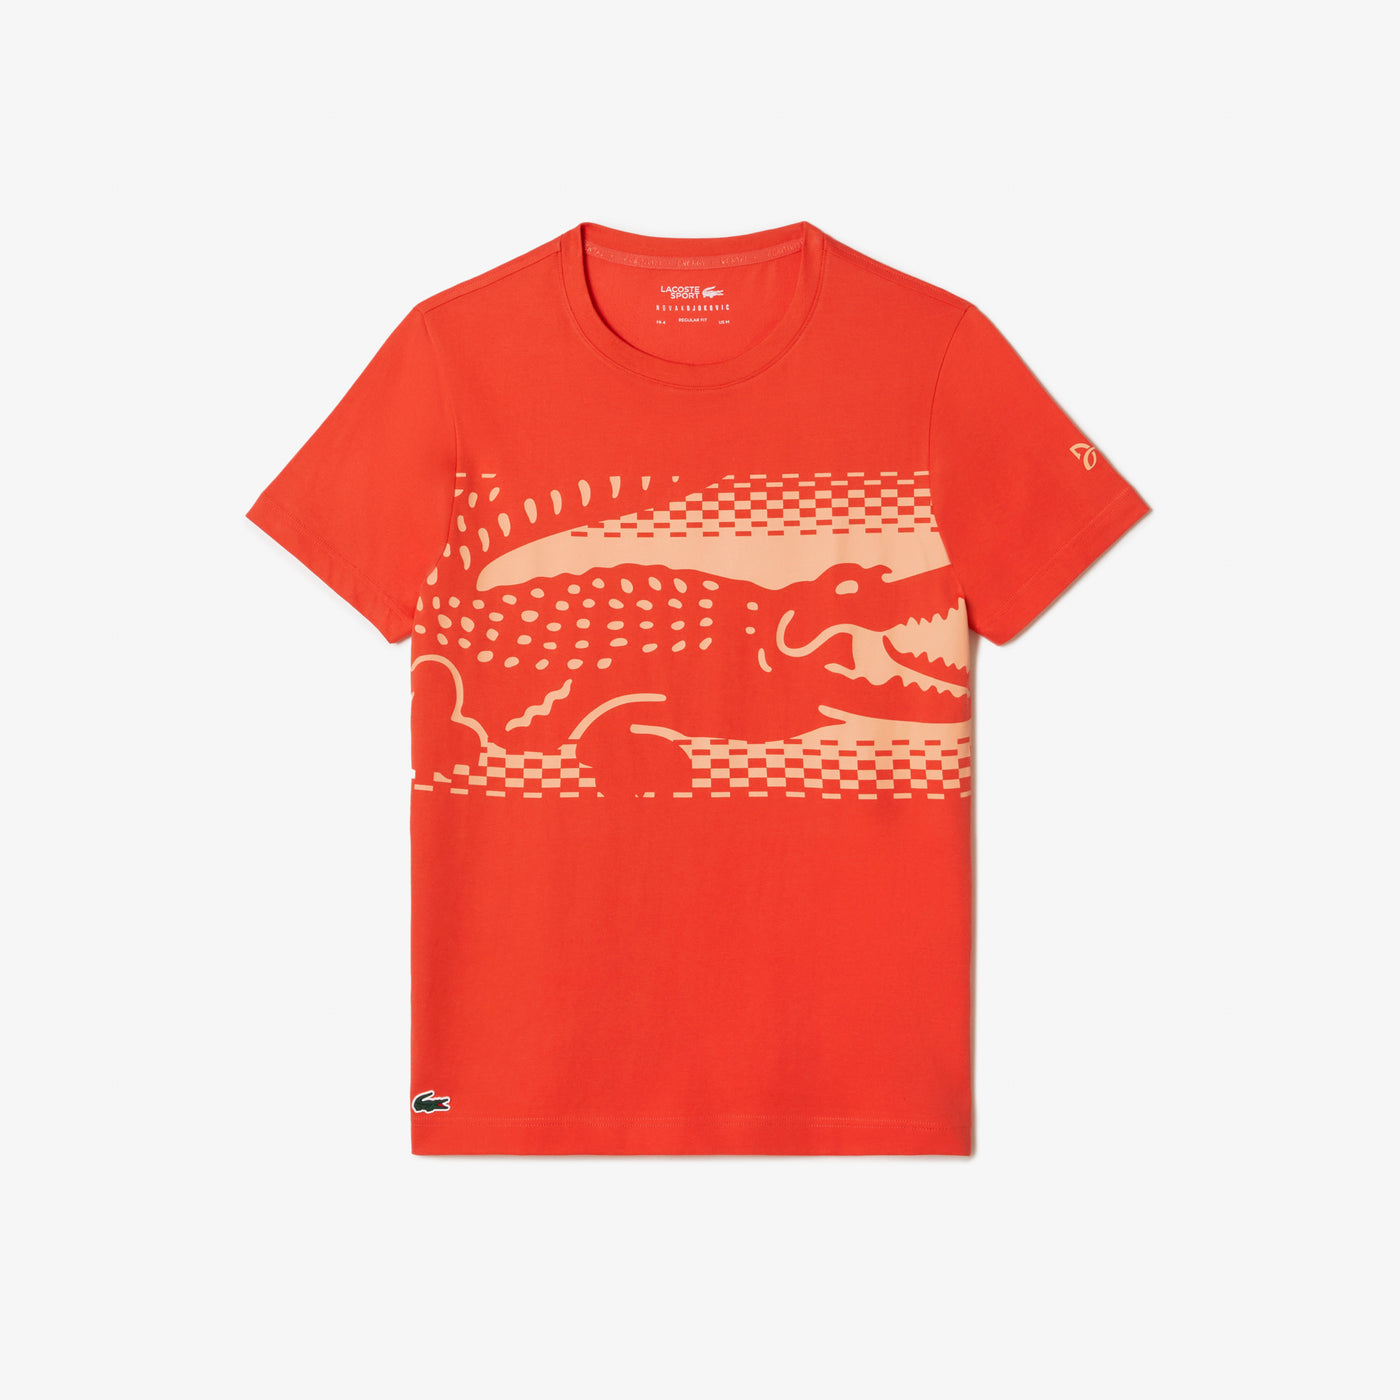 Men’s Lacoste Tennis x Novak Djokovic T-shirt - TH5195